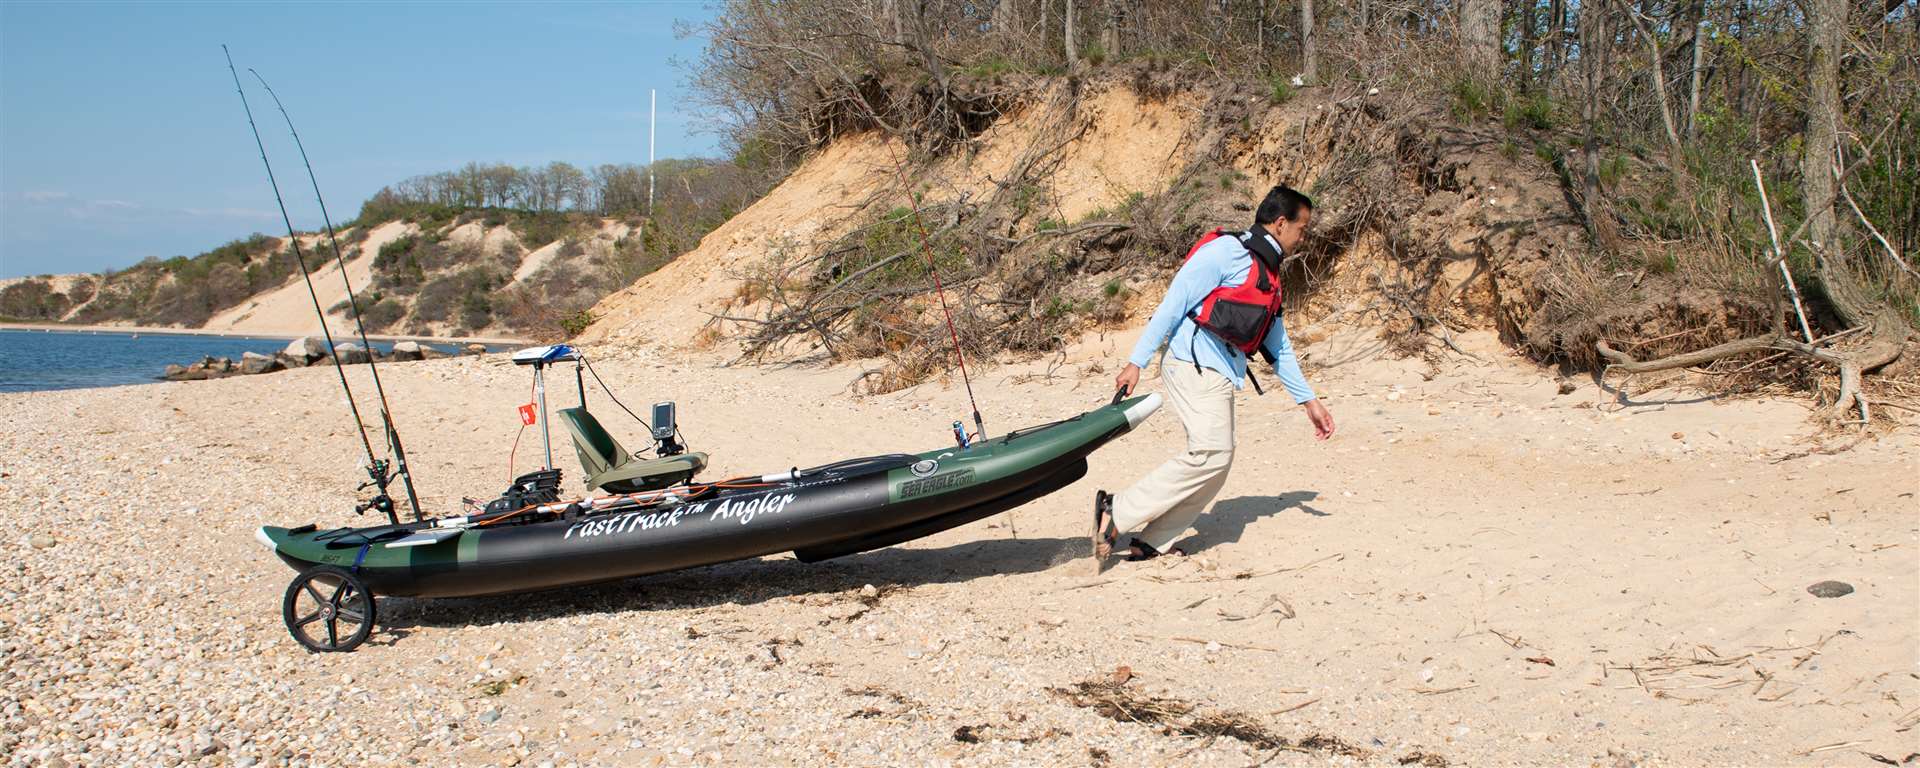 Buy Sea Eagle FastTrack Inflatable Kayak